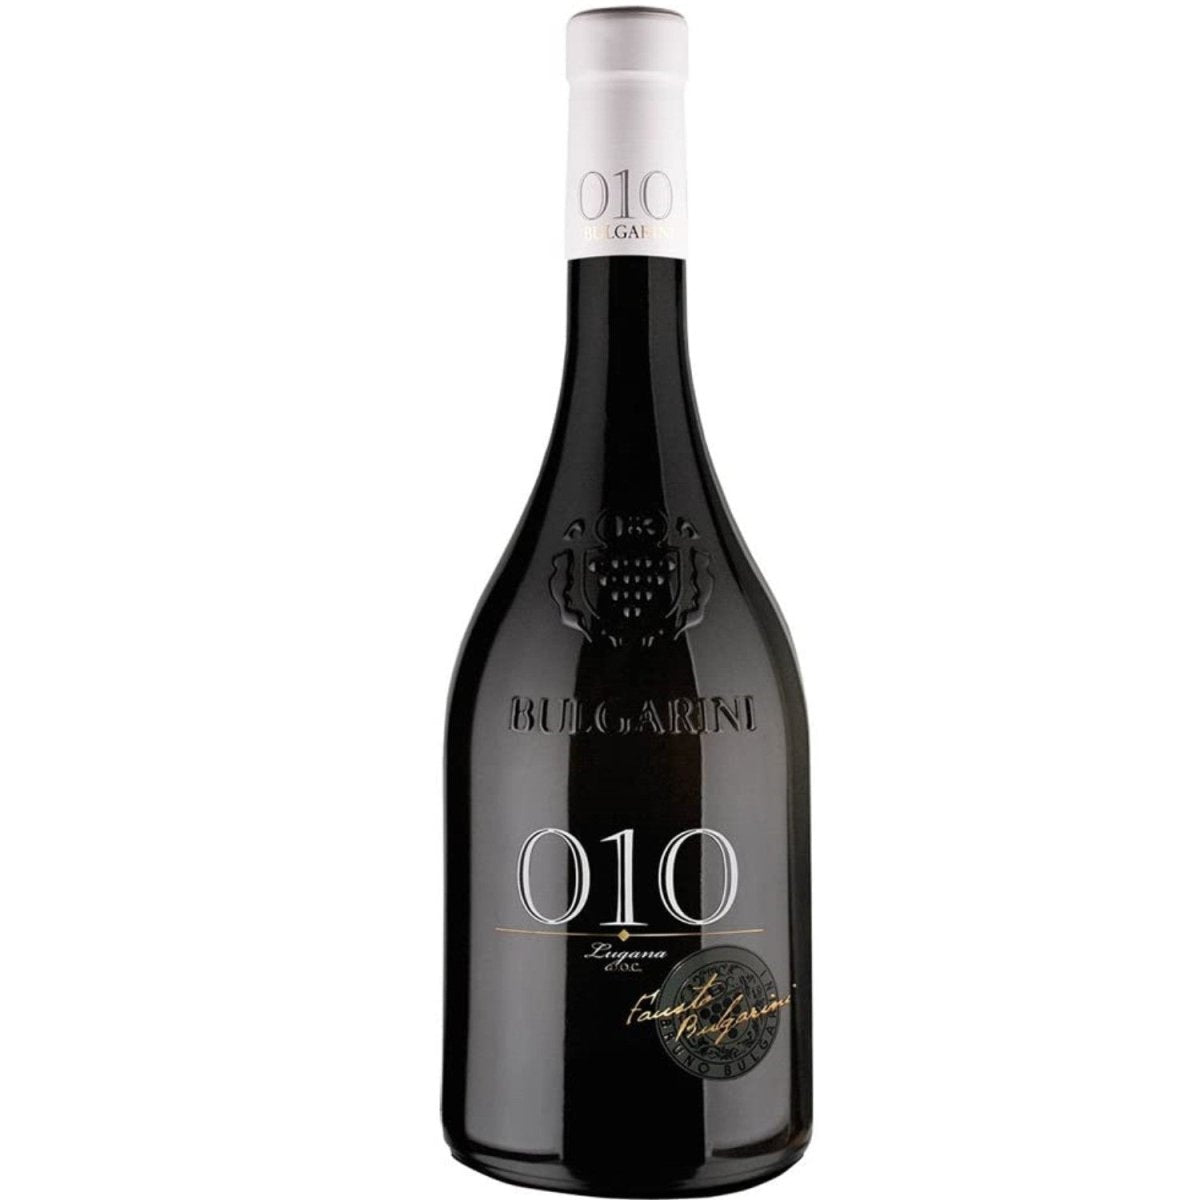 Cantina Bulgarini 010 Lugana DOC Weißwein Wein trocken Italien (3 x 0.75l) - Versanel -